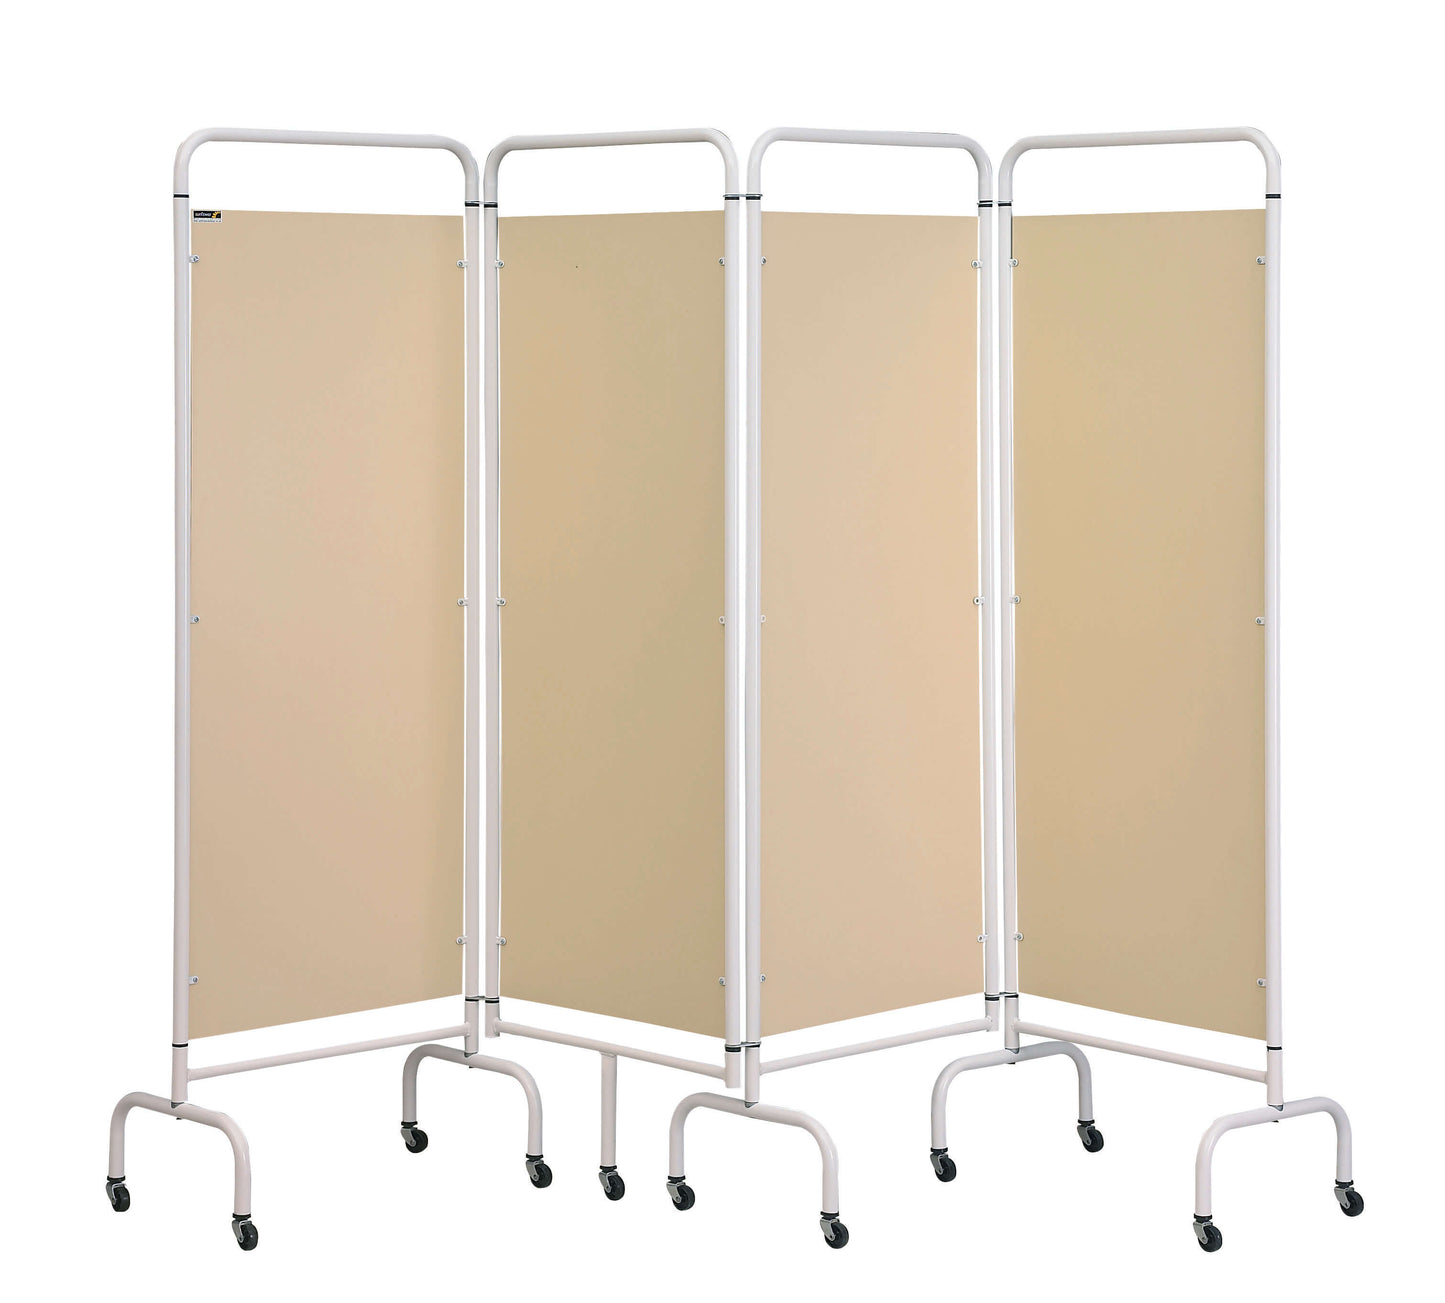 Sunflower - 4 Panel Mobile Folding Hospital Ward Screen